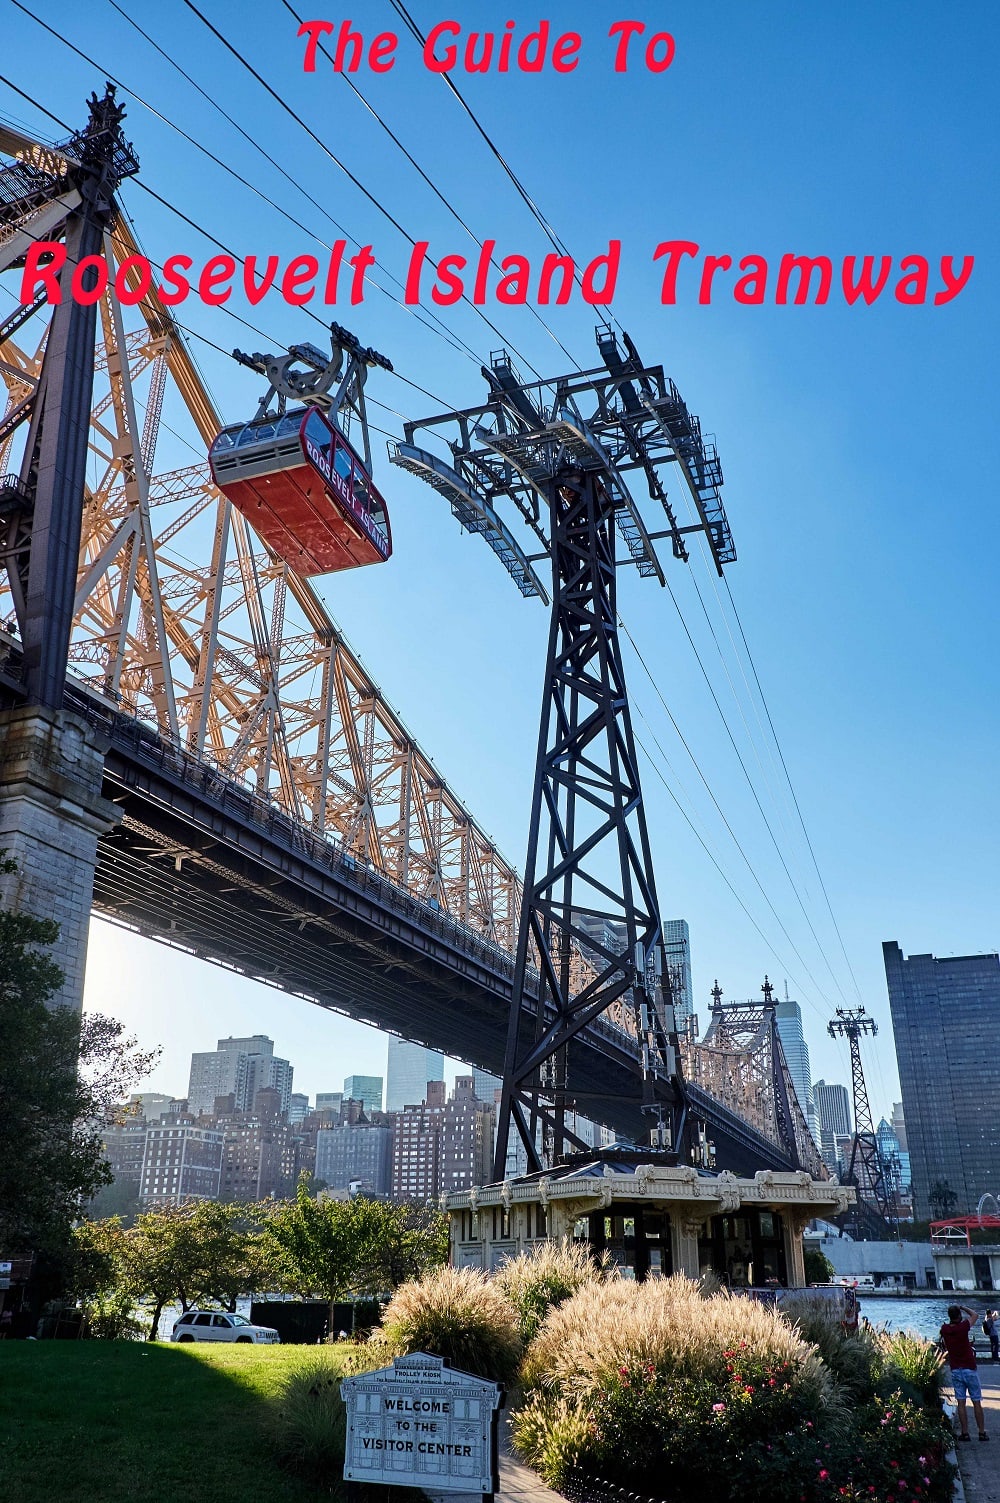 The Roosevelt Island Tram